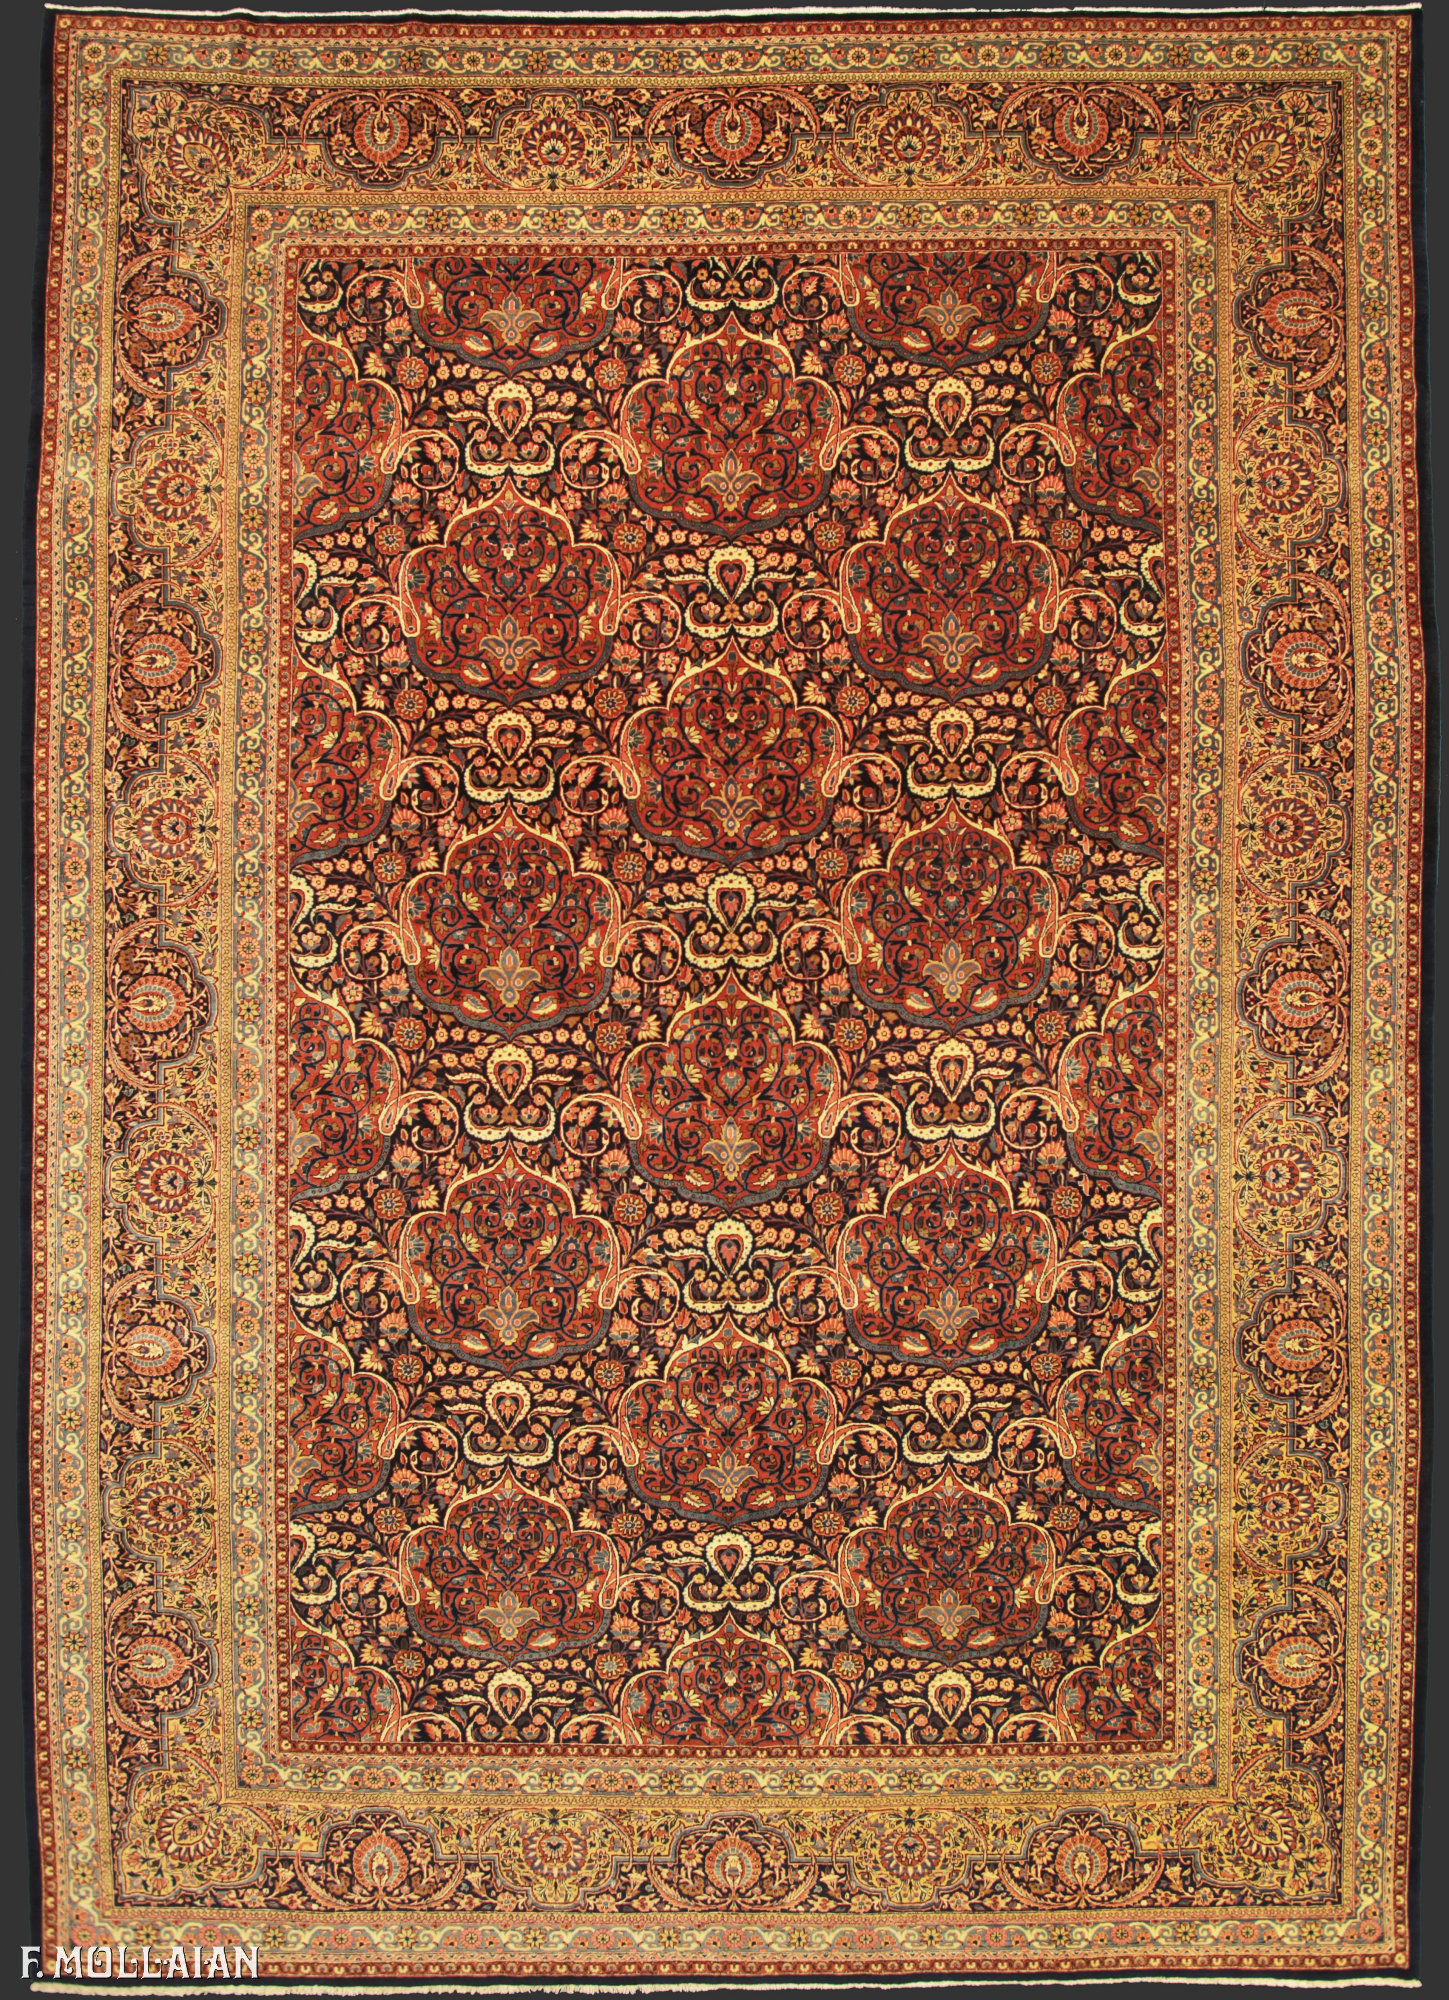 Tappeto Grande Persiano Antico Kashan Dabir n°:98151652